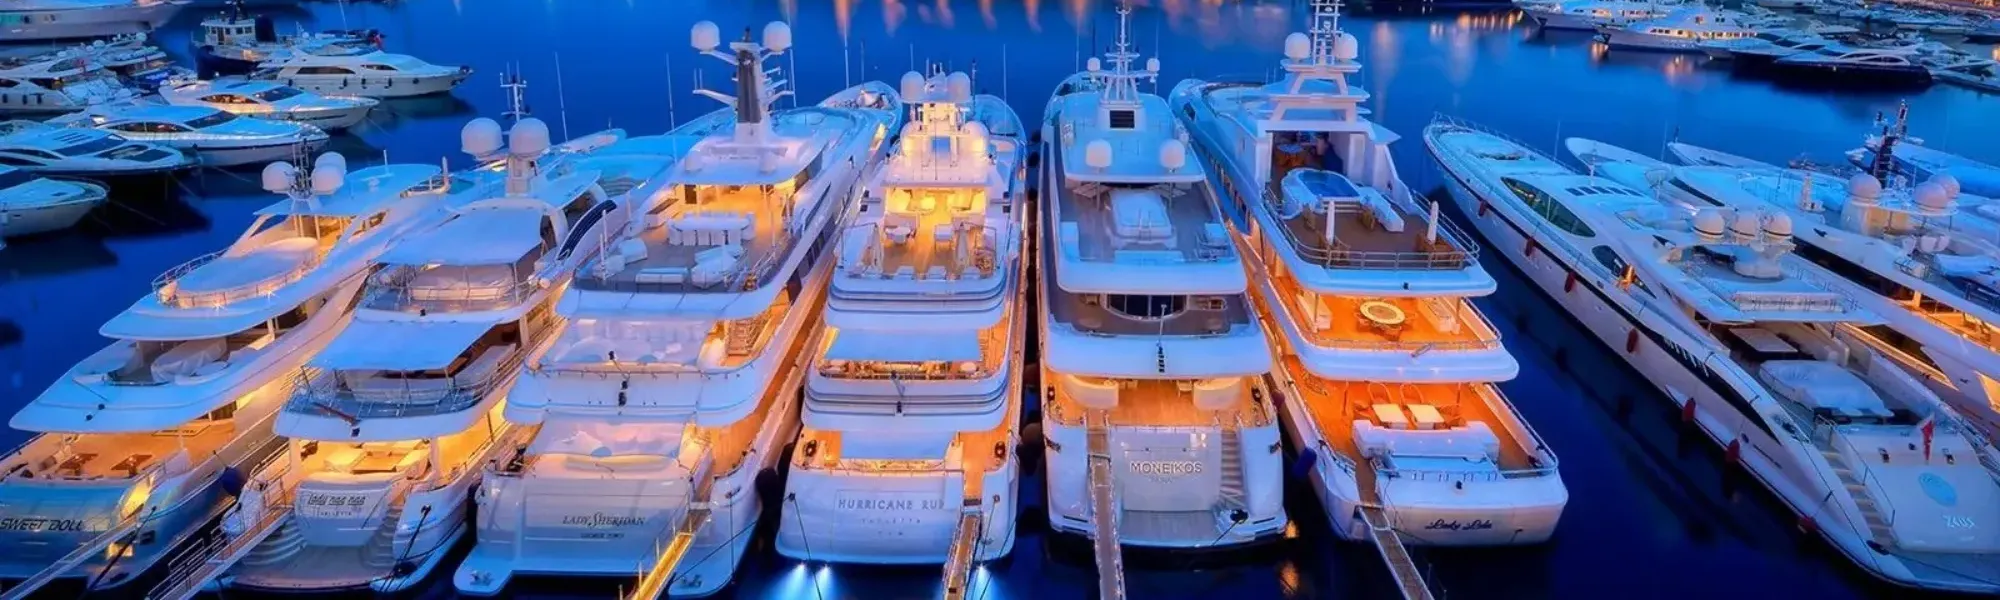 Superyacht Deck Jobs - Yacht Crew Deck Jobs - Faststream Recruitment